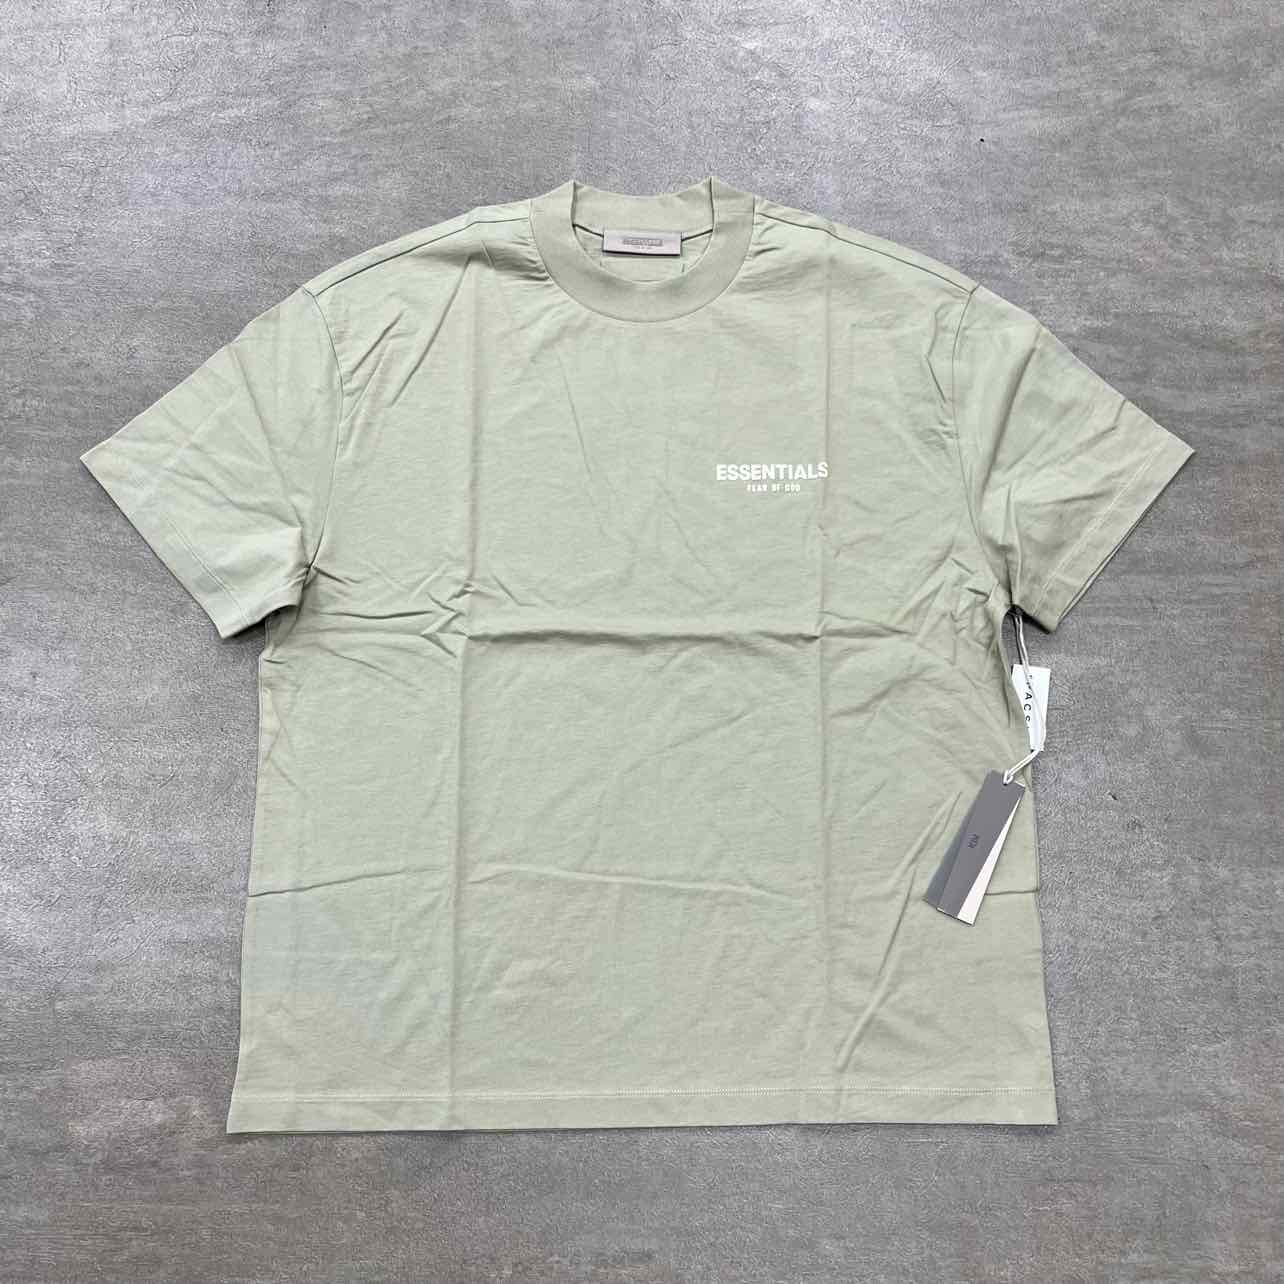 Fear of God T-Shirt "ESSENTIALS" Seafoam New Size XL